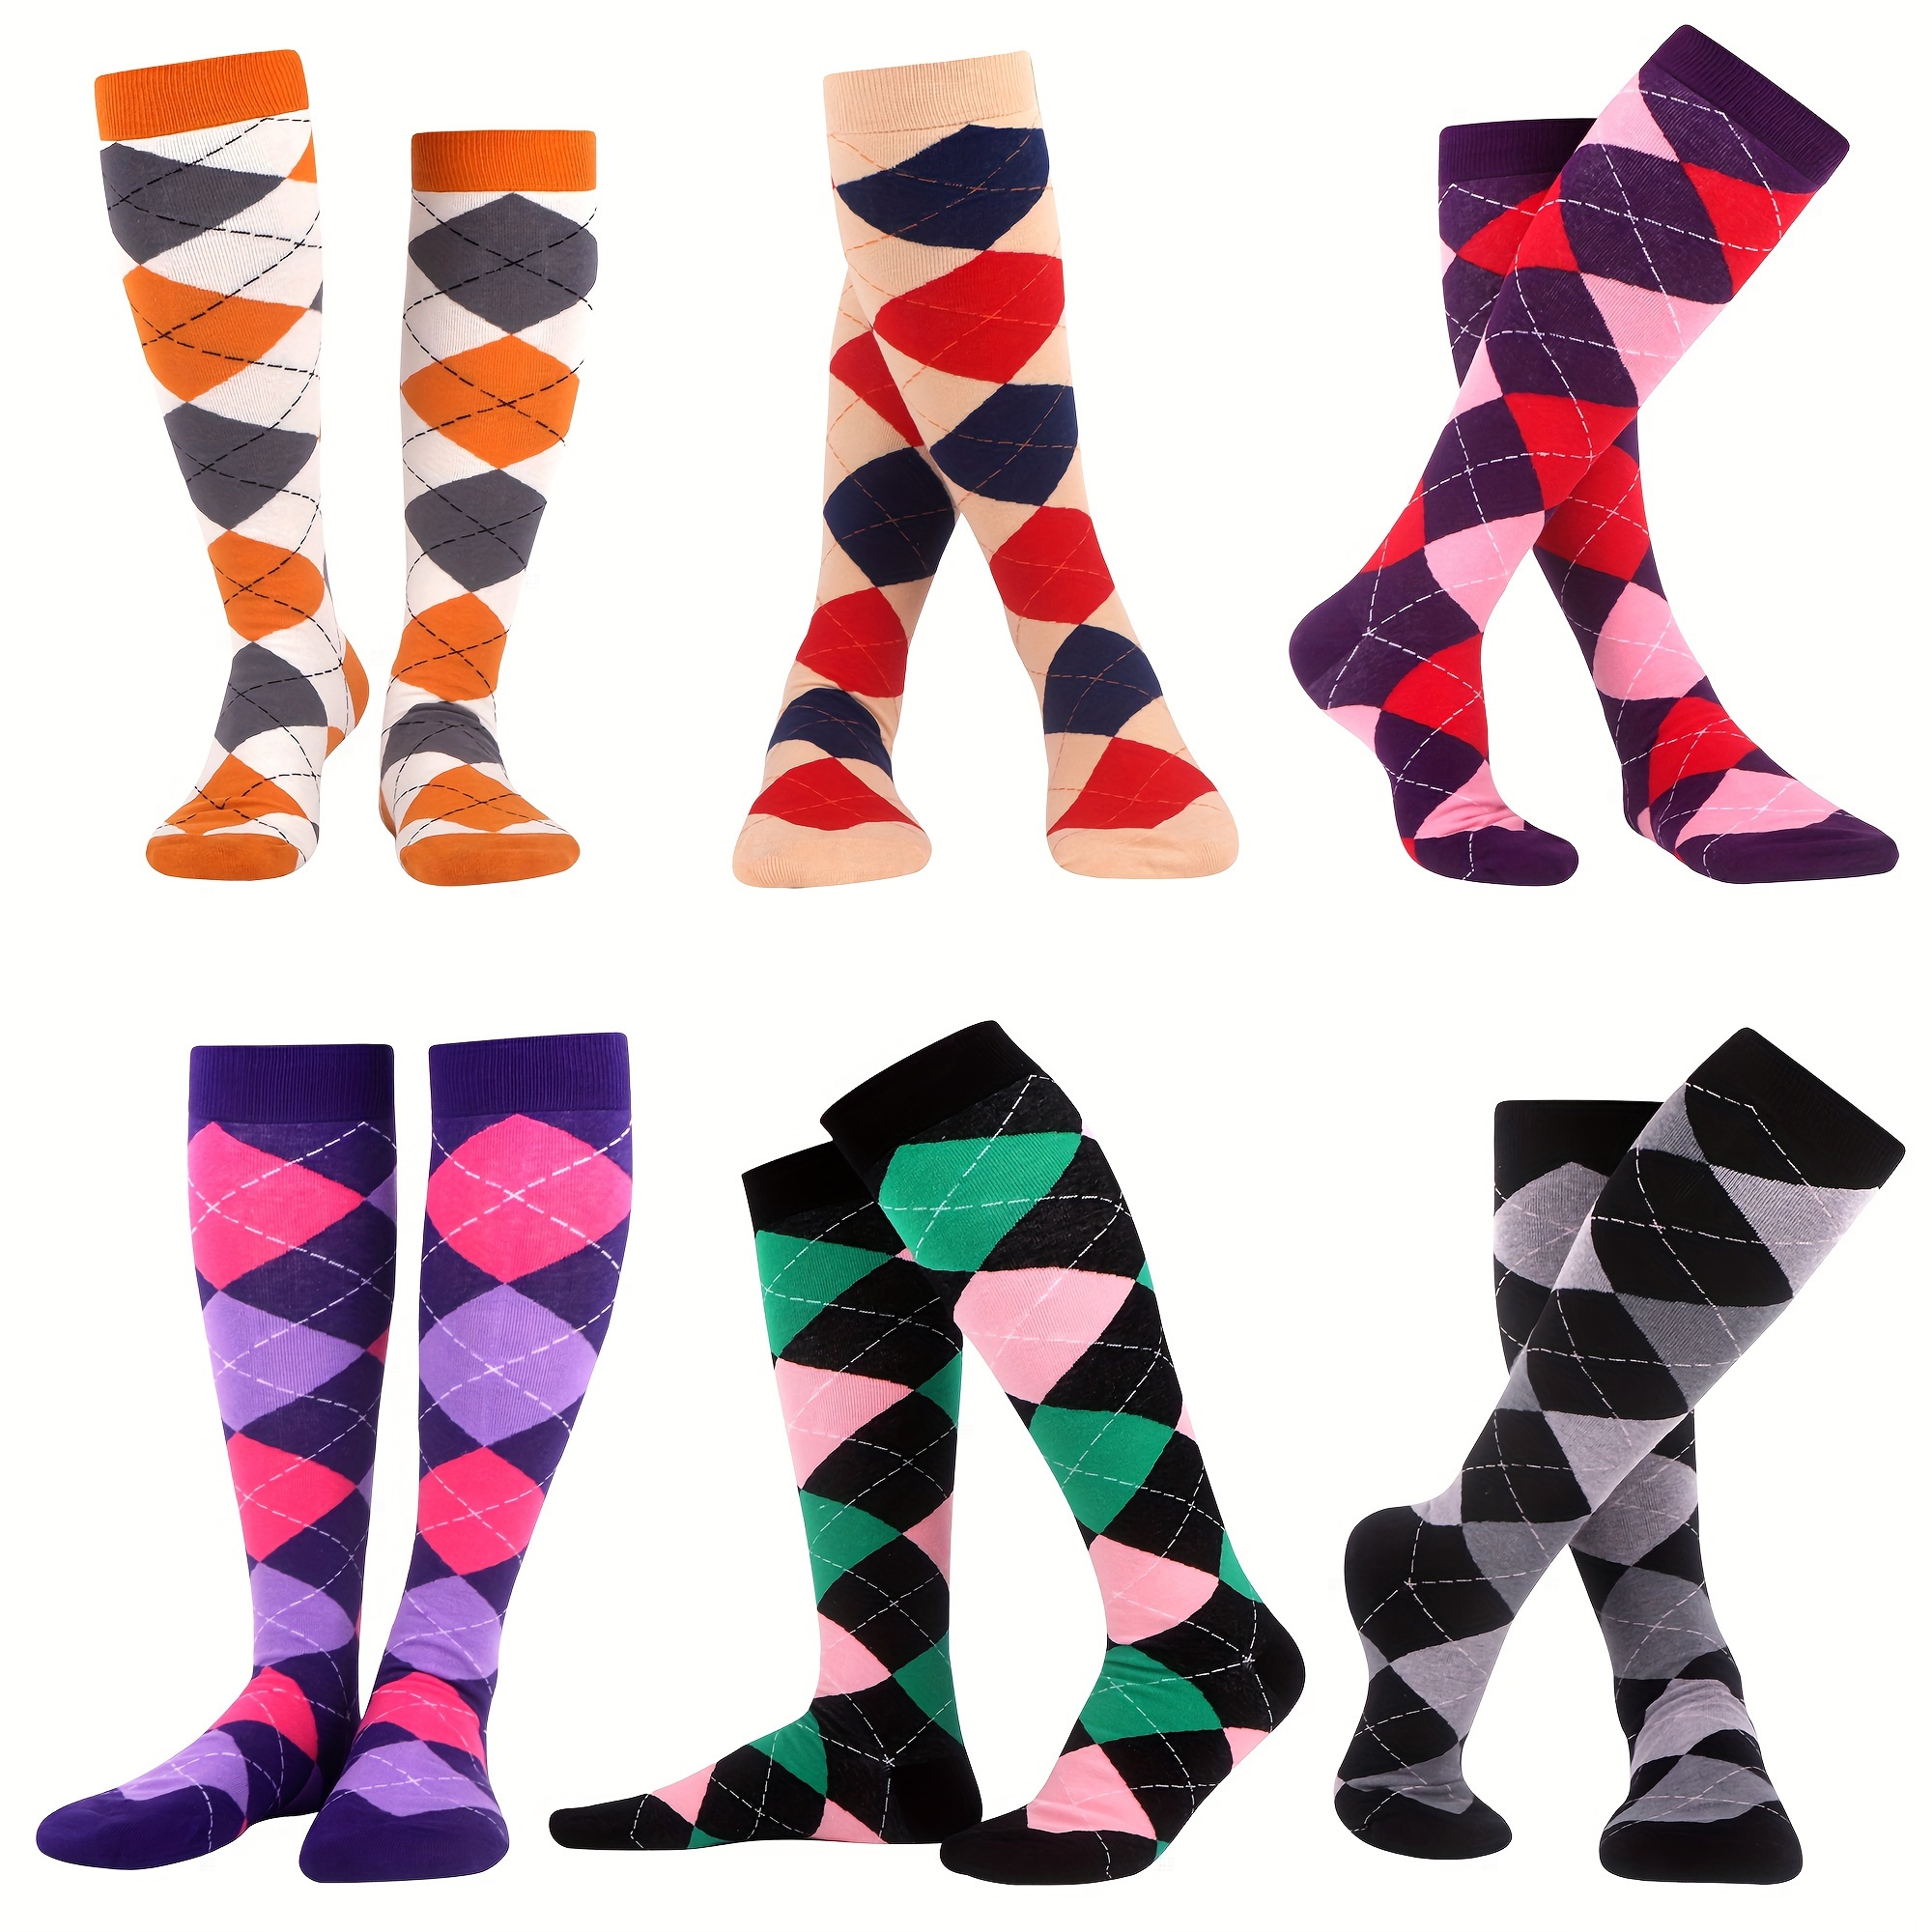 

6 Pairs Argyle Pattern Calf Socks, College Style Novelty Seamless Knee High Socks, Women's Stockings & Hosiery - Fall & Winter